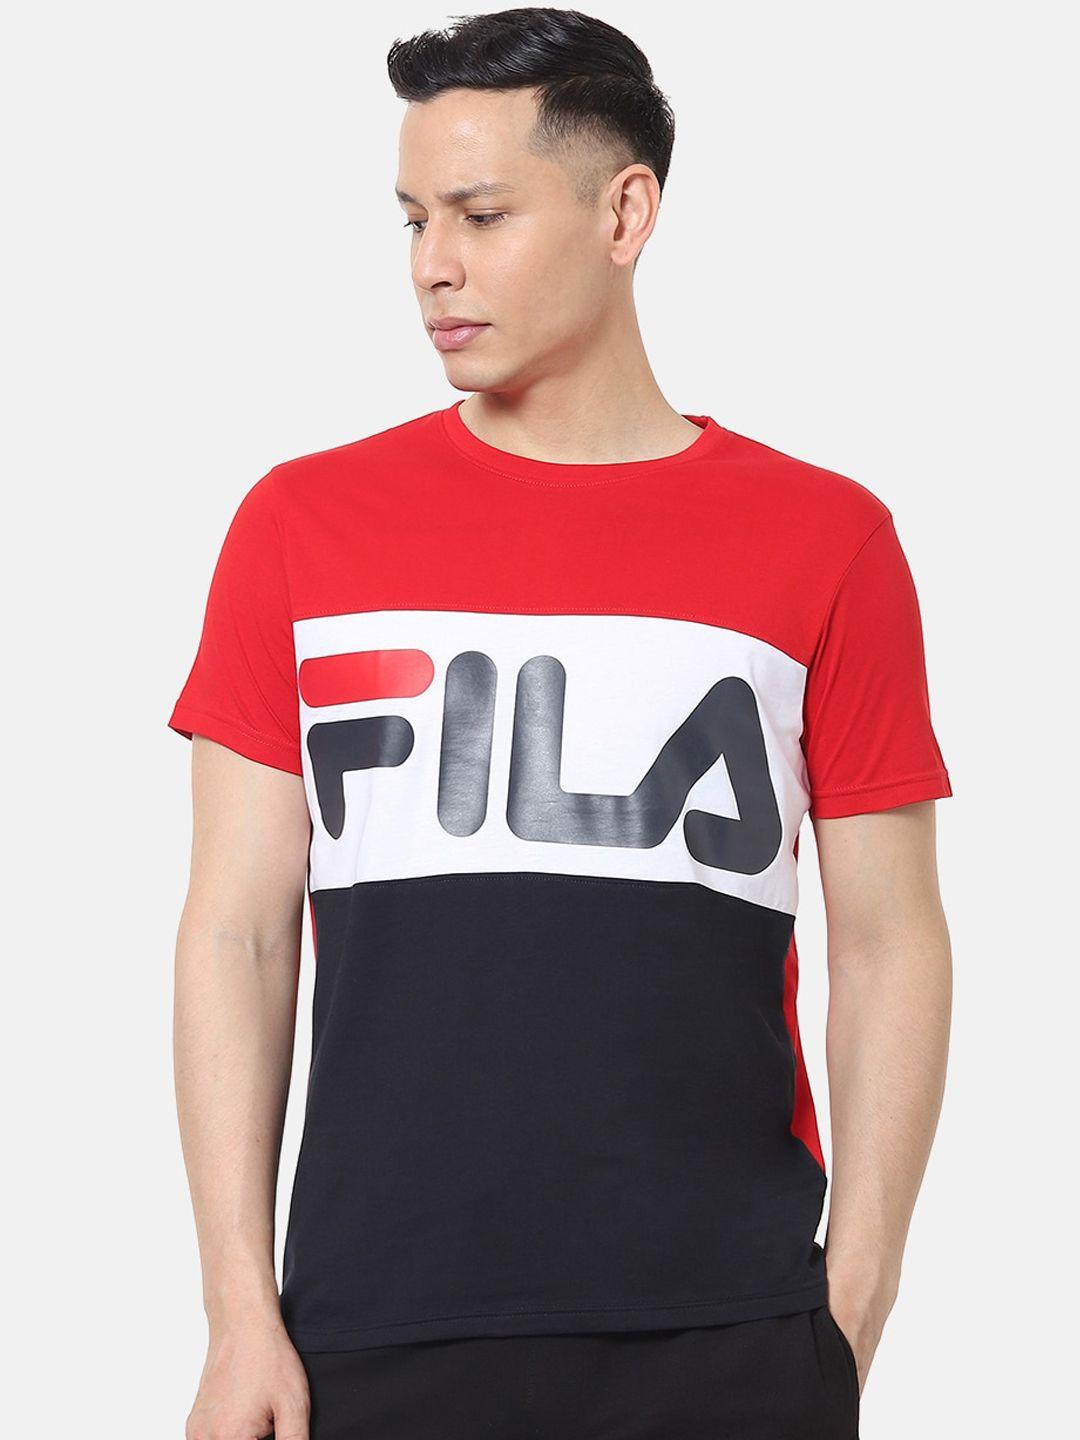 fila-men-red-printed-round-neck-t-shirt